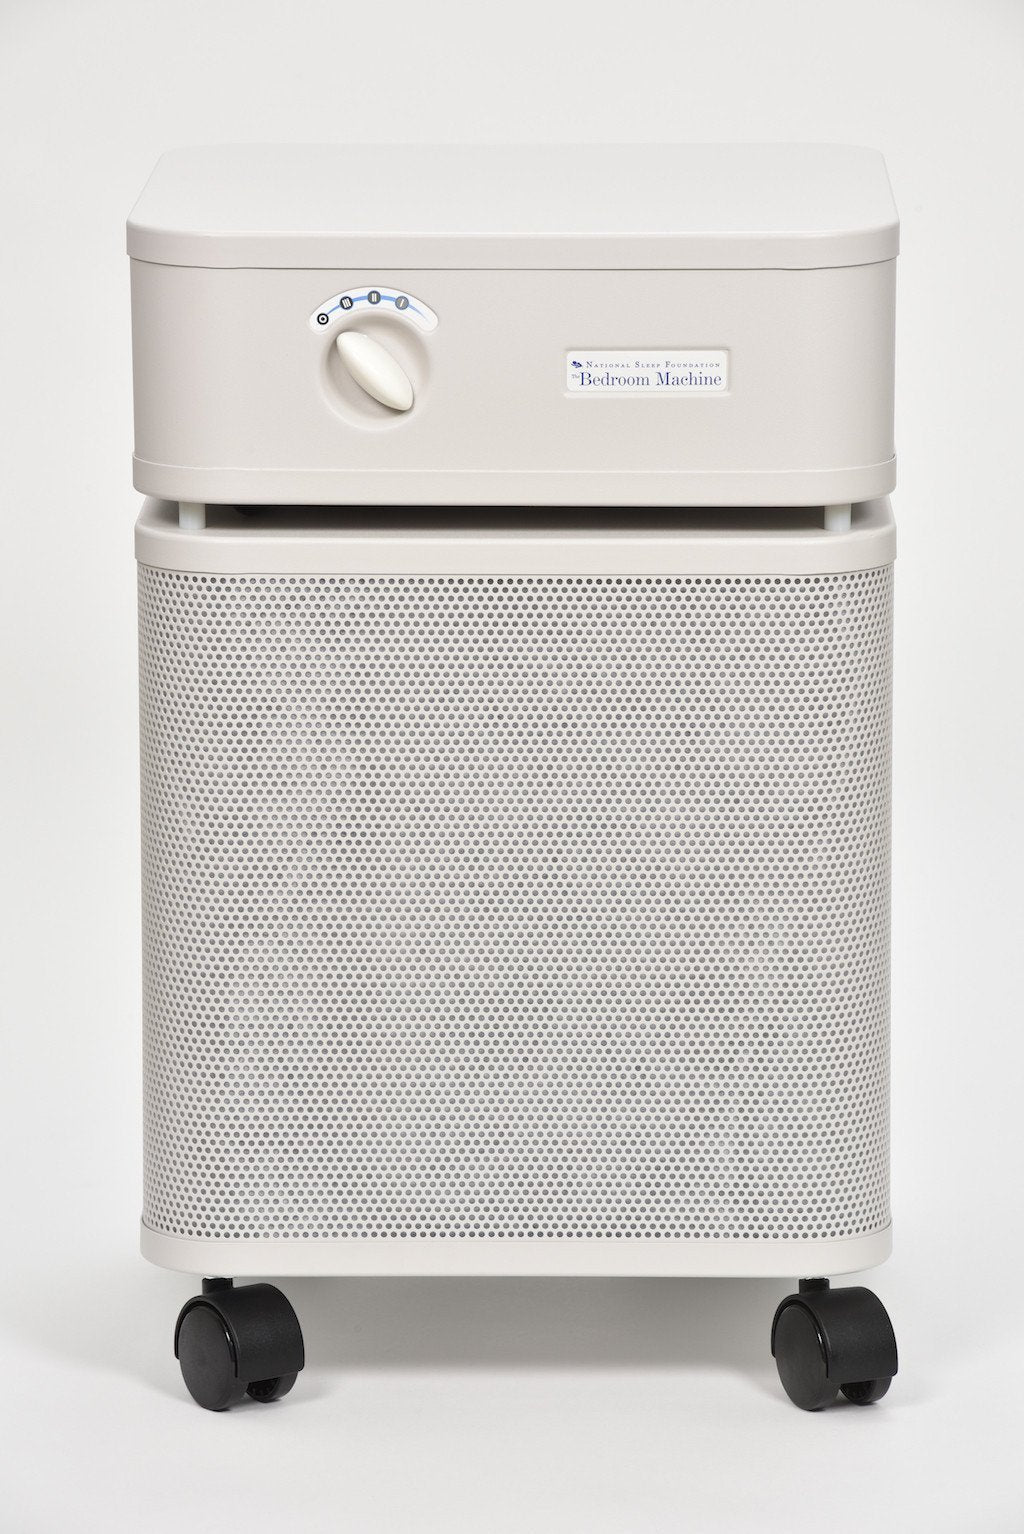 Bedroom Machine HM402 Standard Air Purifier